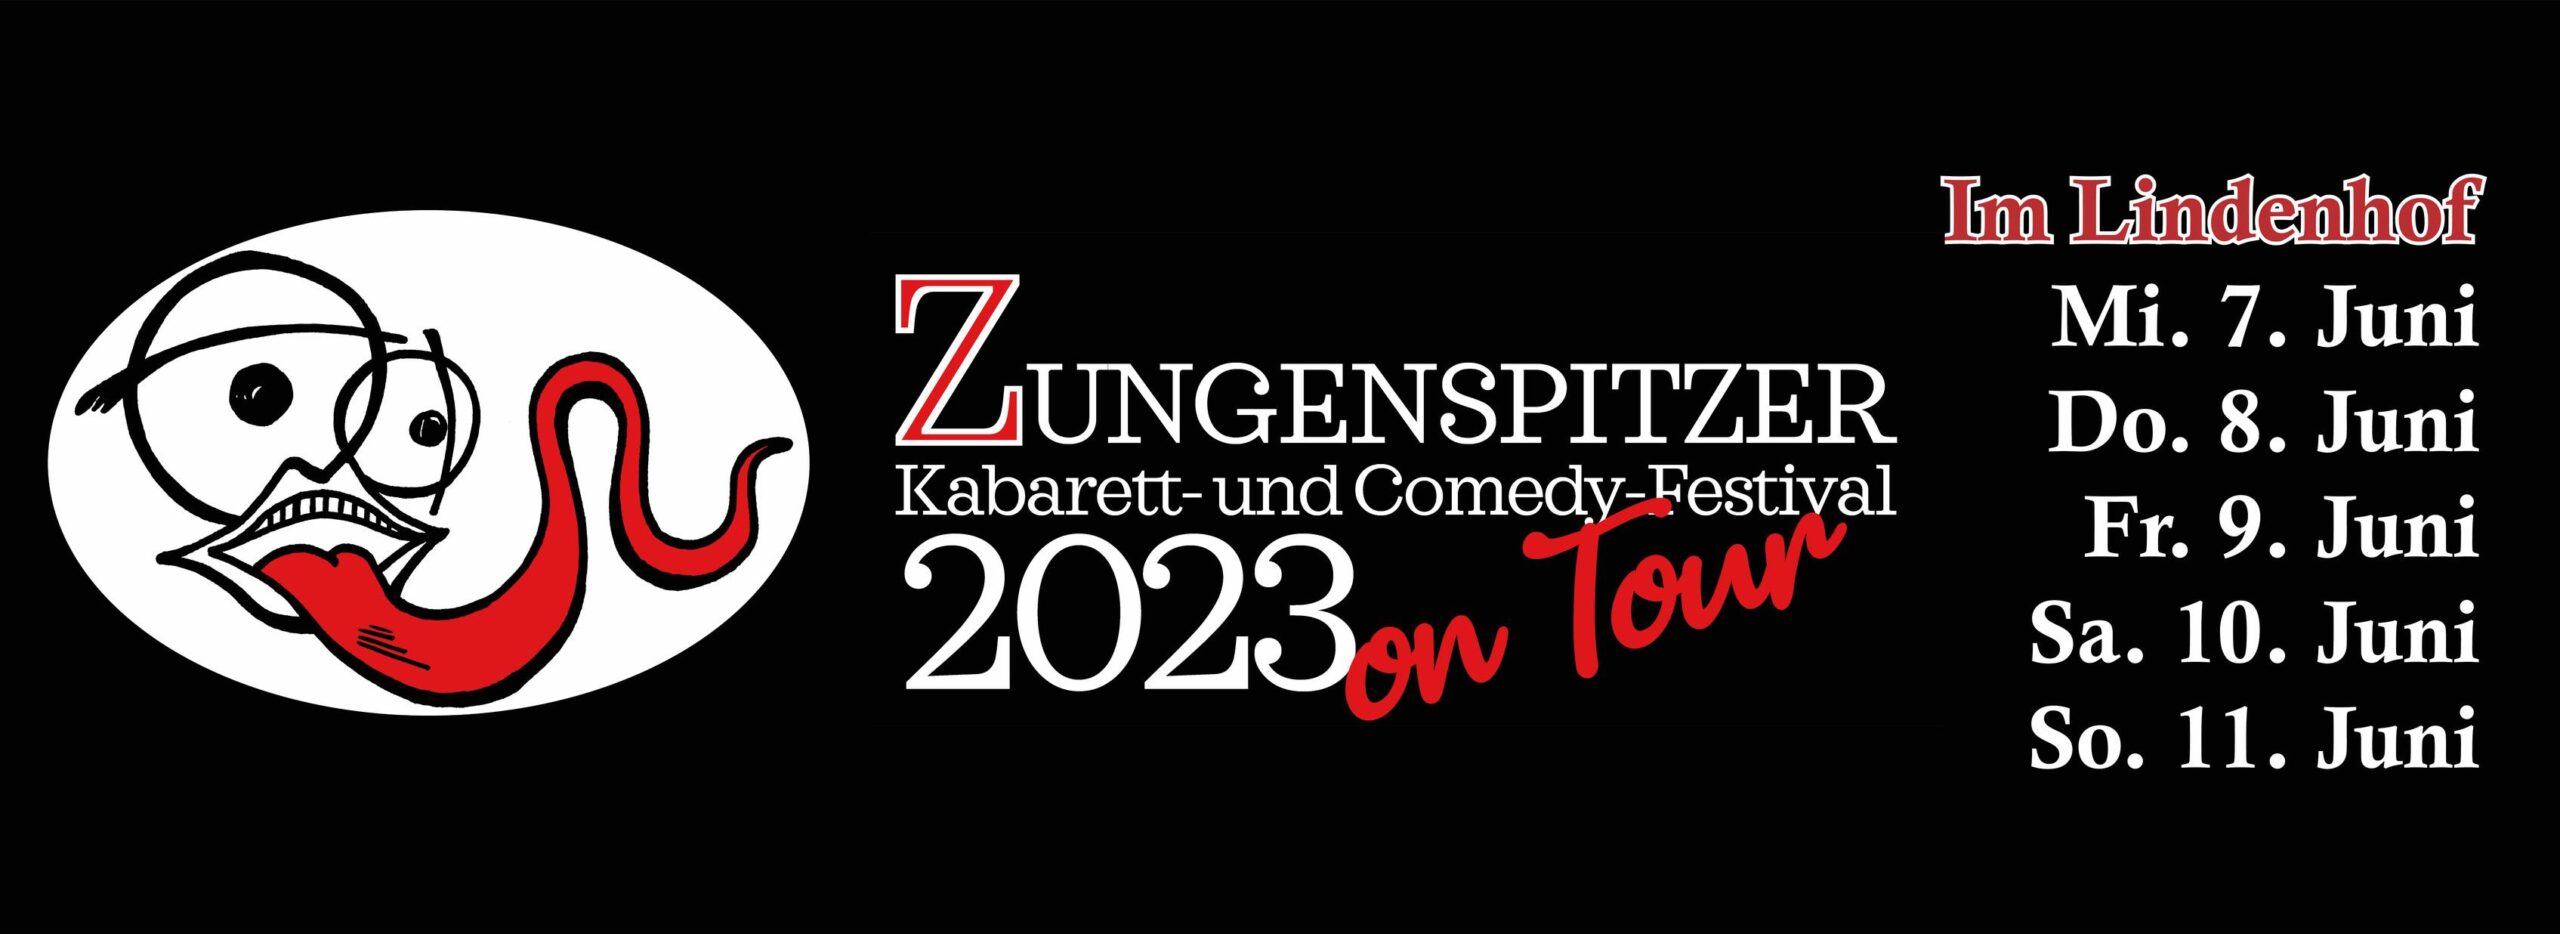 Zungenspitzer-Festival 2023